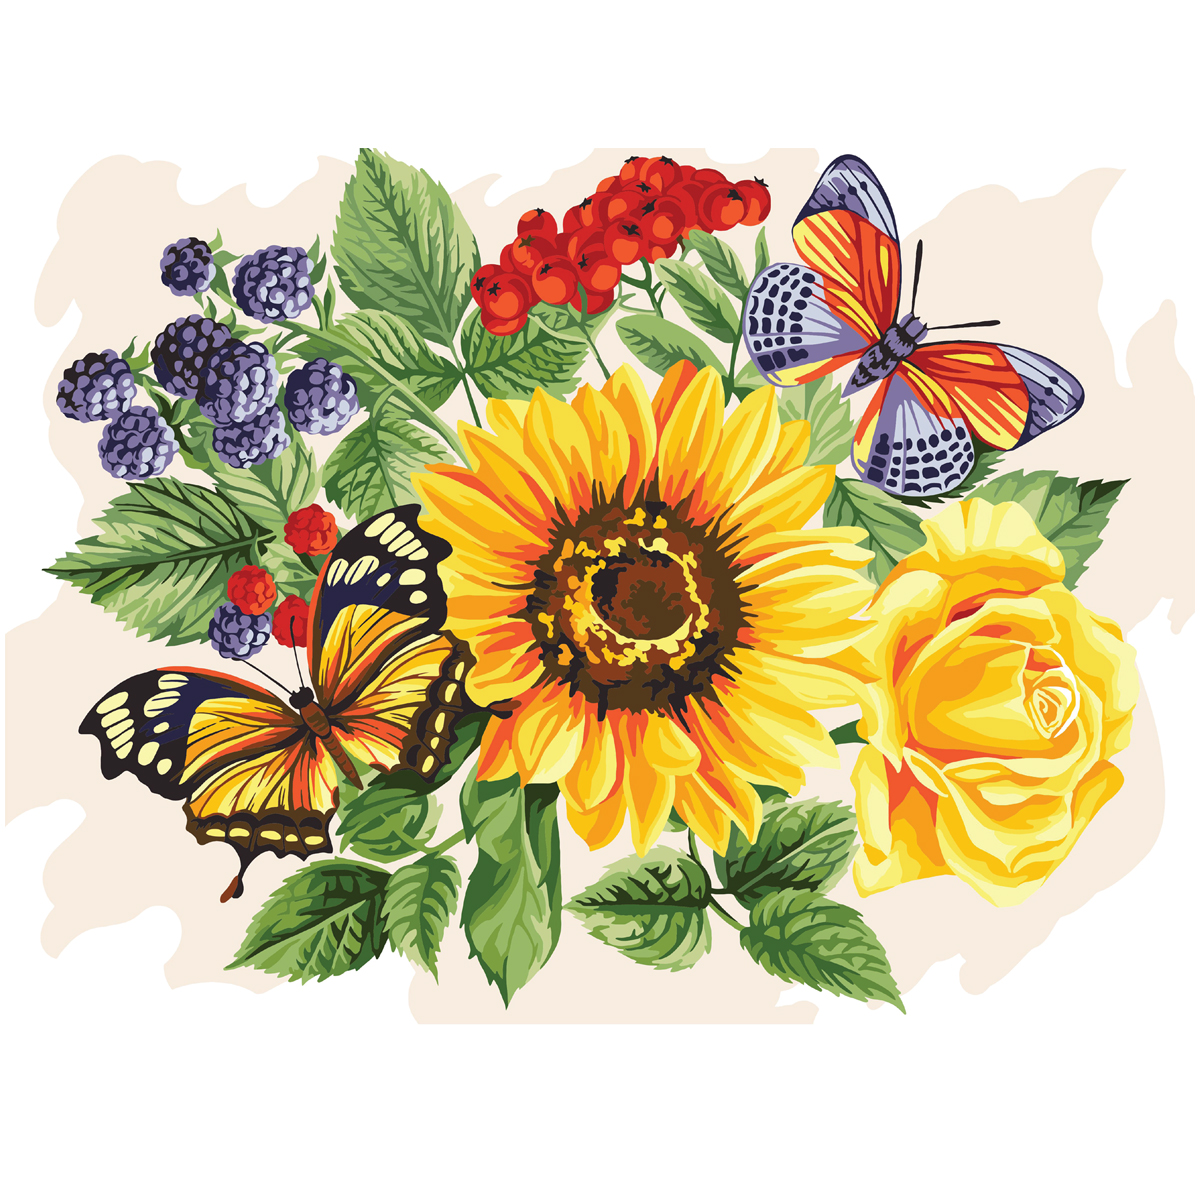 Картина по номерам на холсте ТРИ СОВЫ "Подсолнухи и бабочки", 30*40, с акриловыми красками и кистями